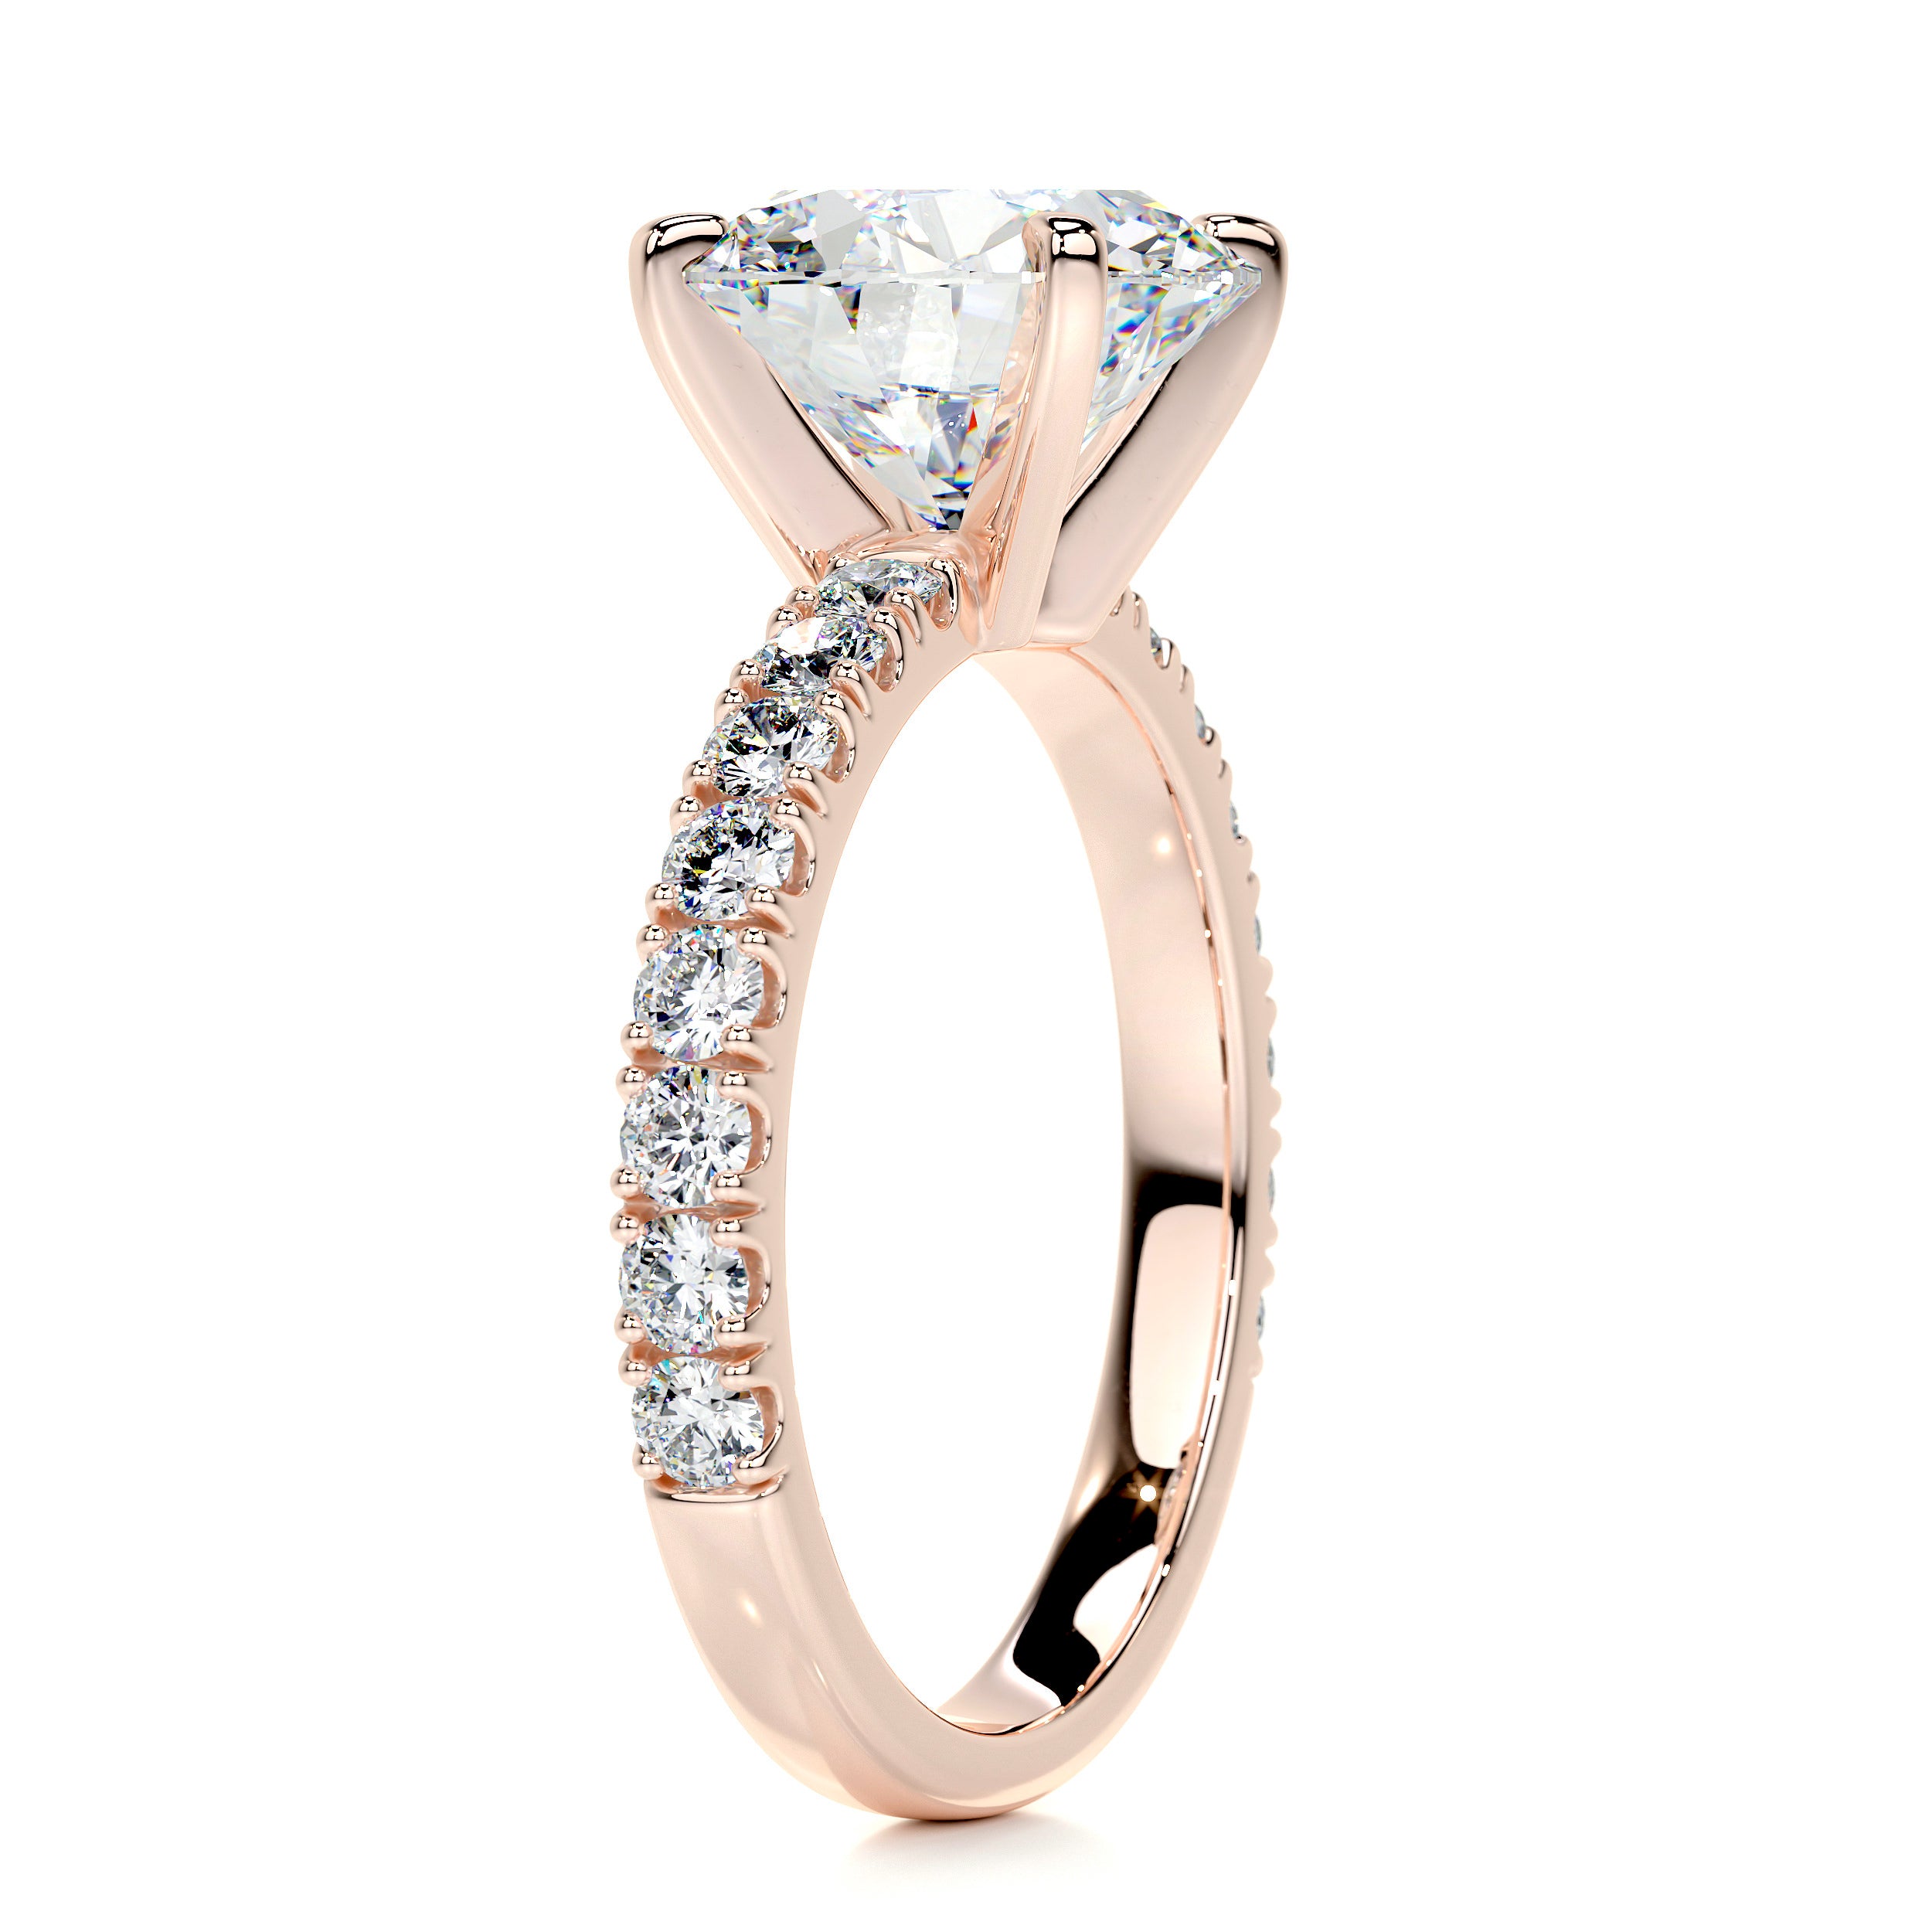 Alison Moissanite & Diamonds Ring   (3.62 Carat) -14K Rose Gold